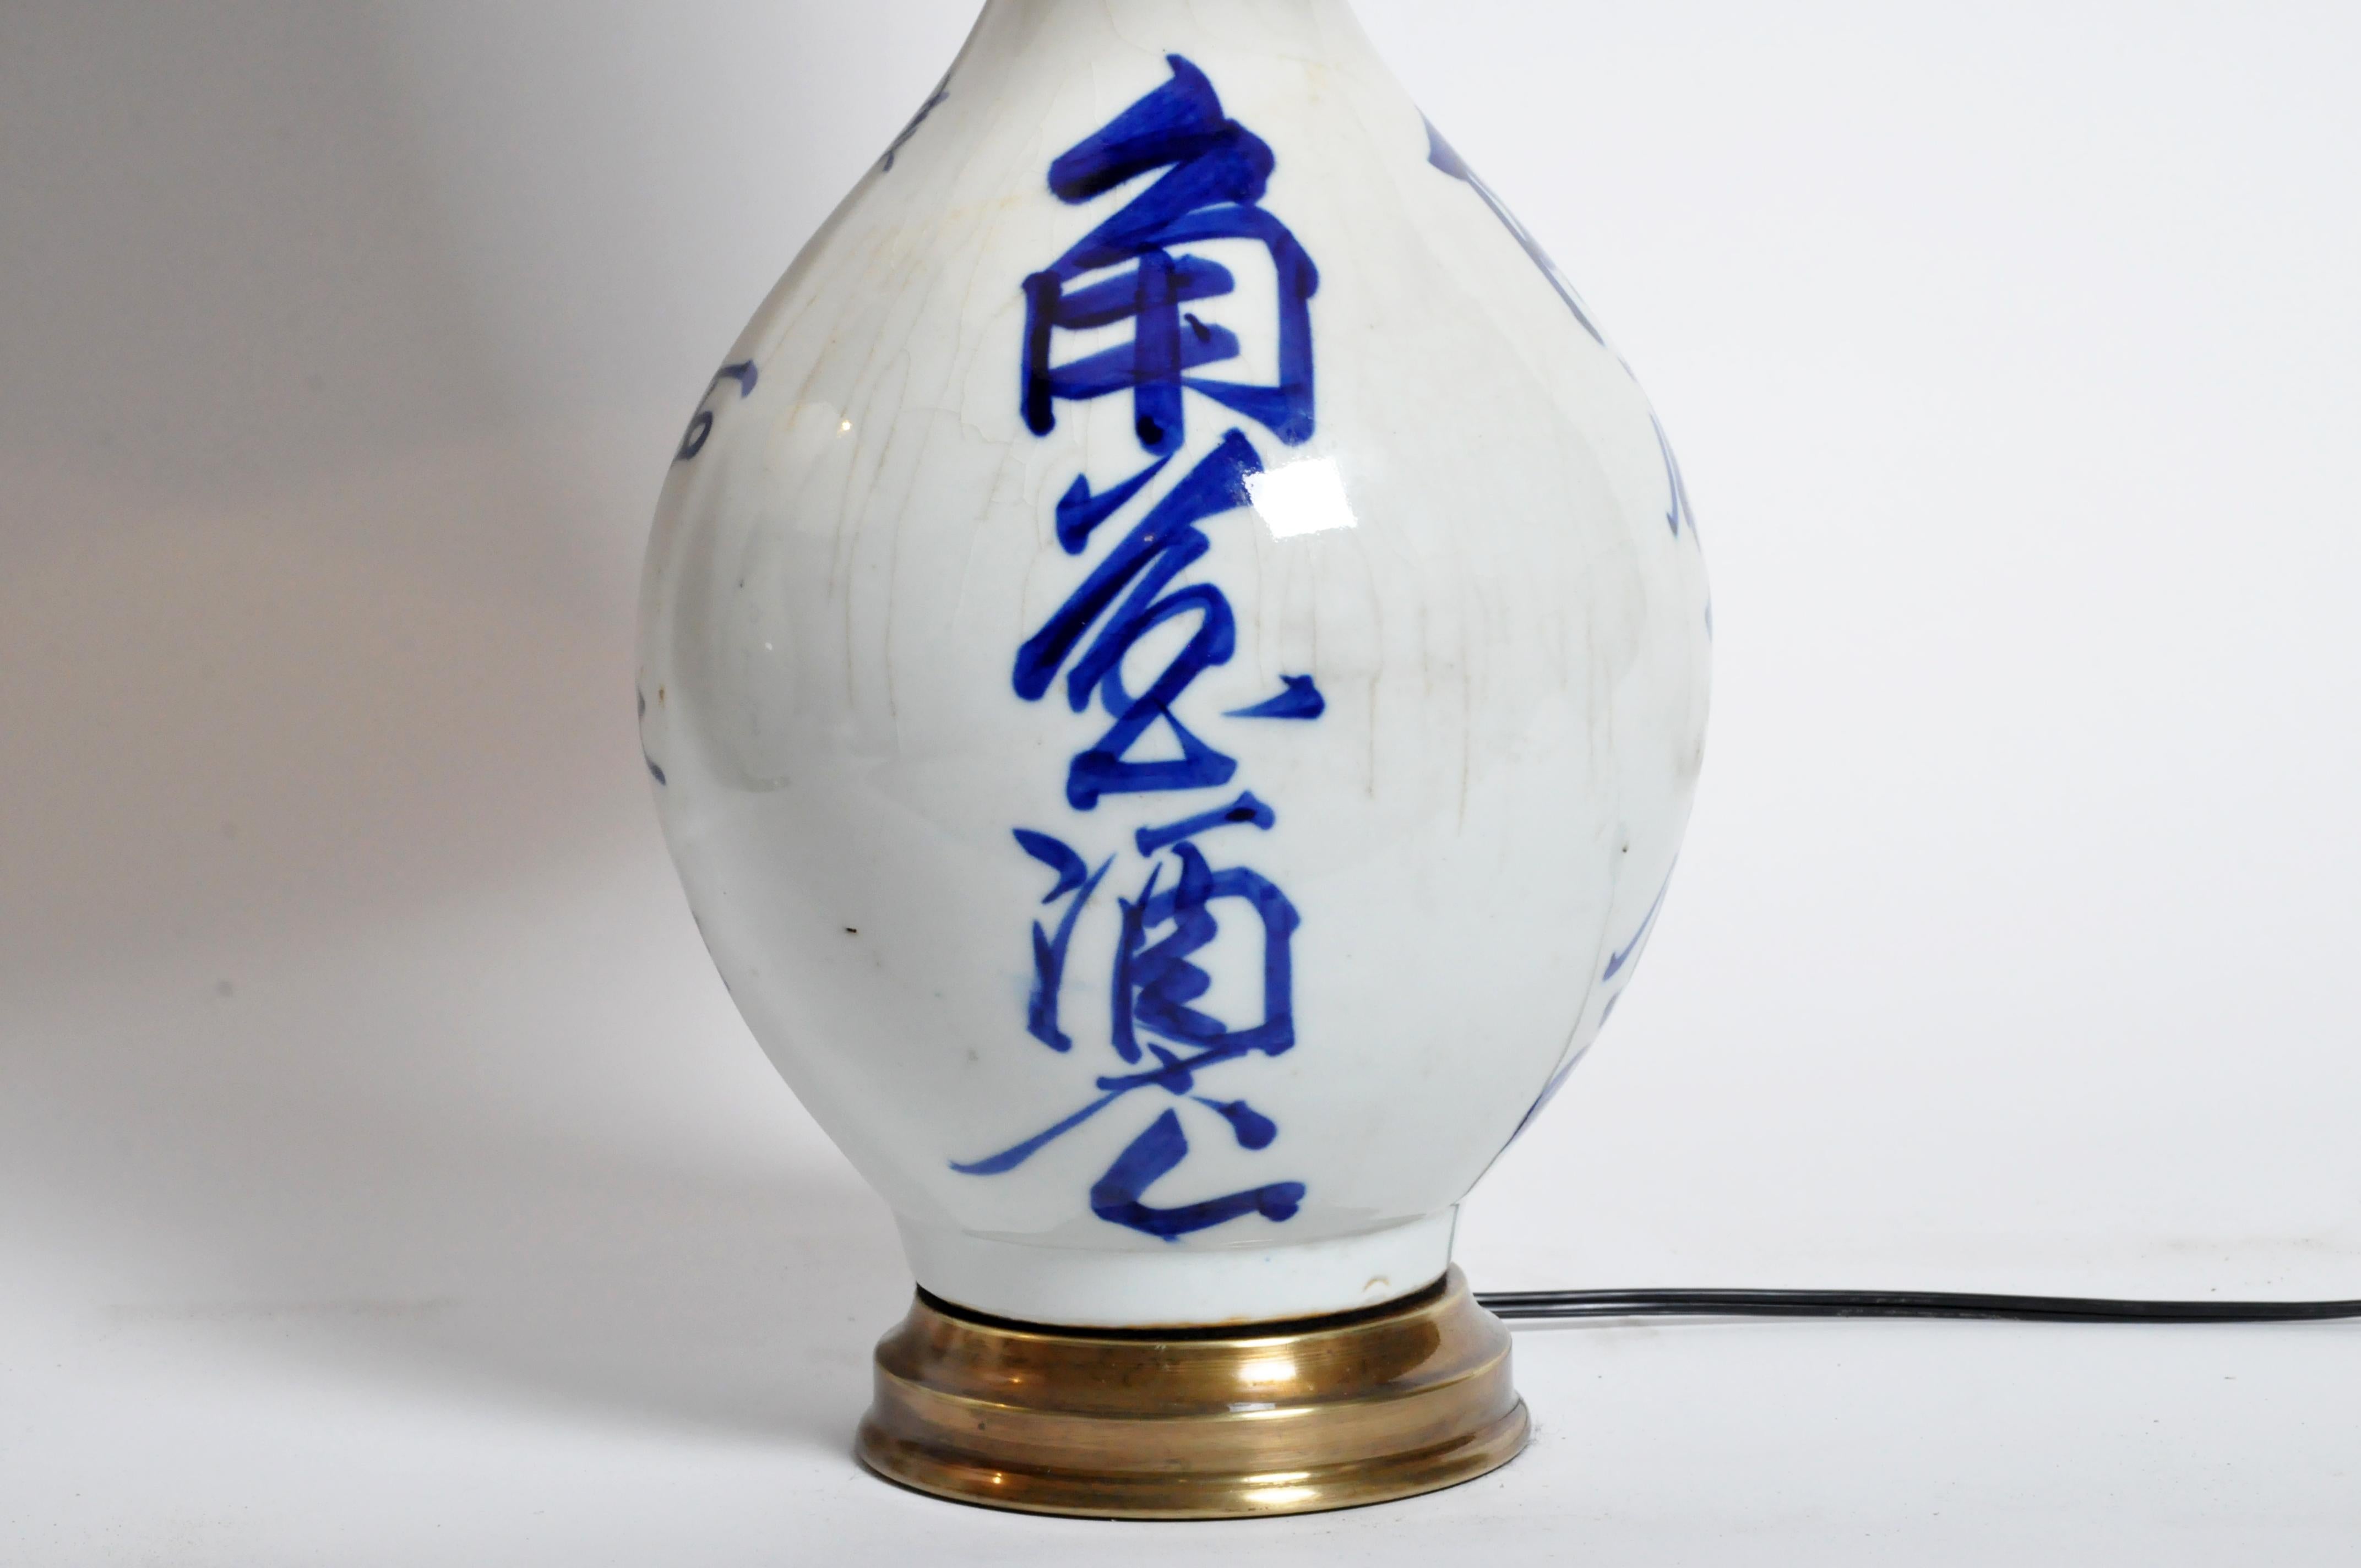 Japanese Sake Bottles Converted to Lamps 4